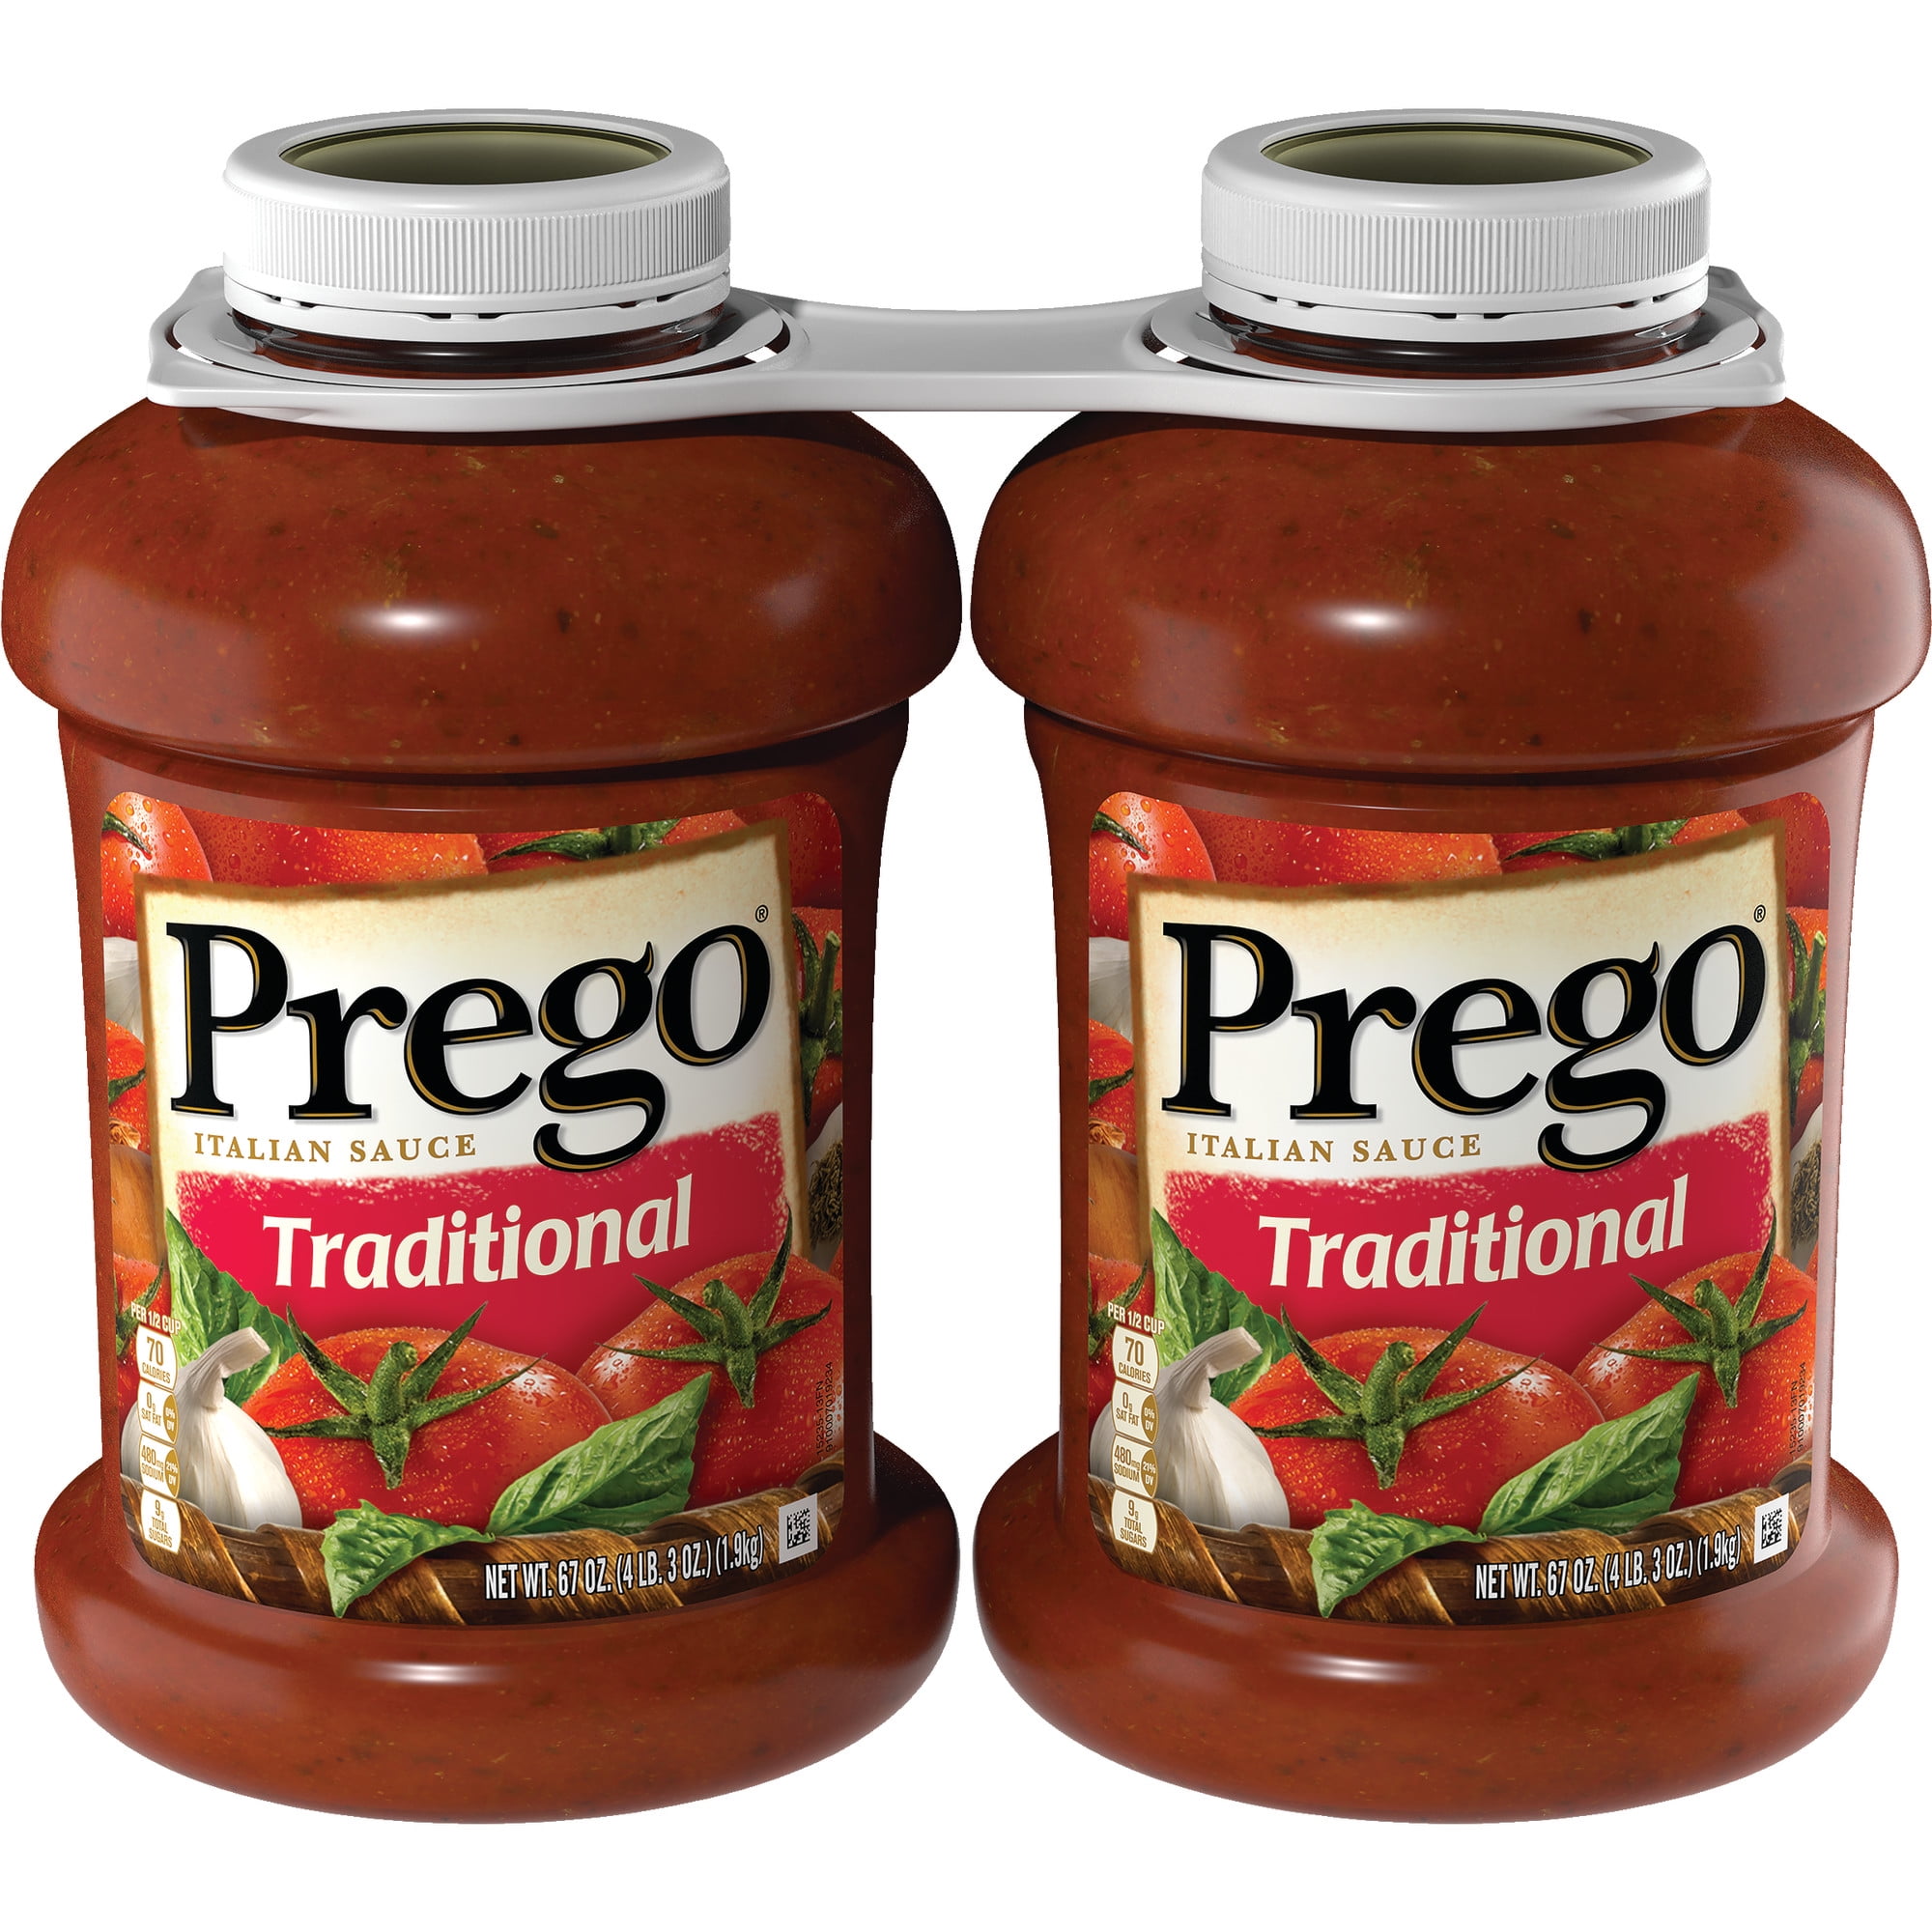 Prego Traditional Pasta Sauce, 67 Oz Jar